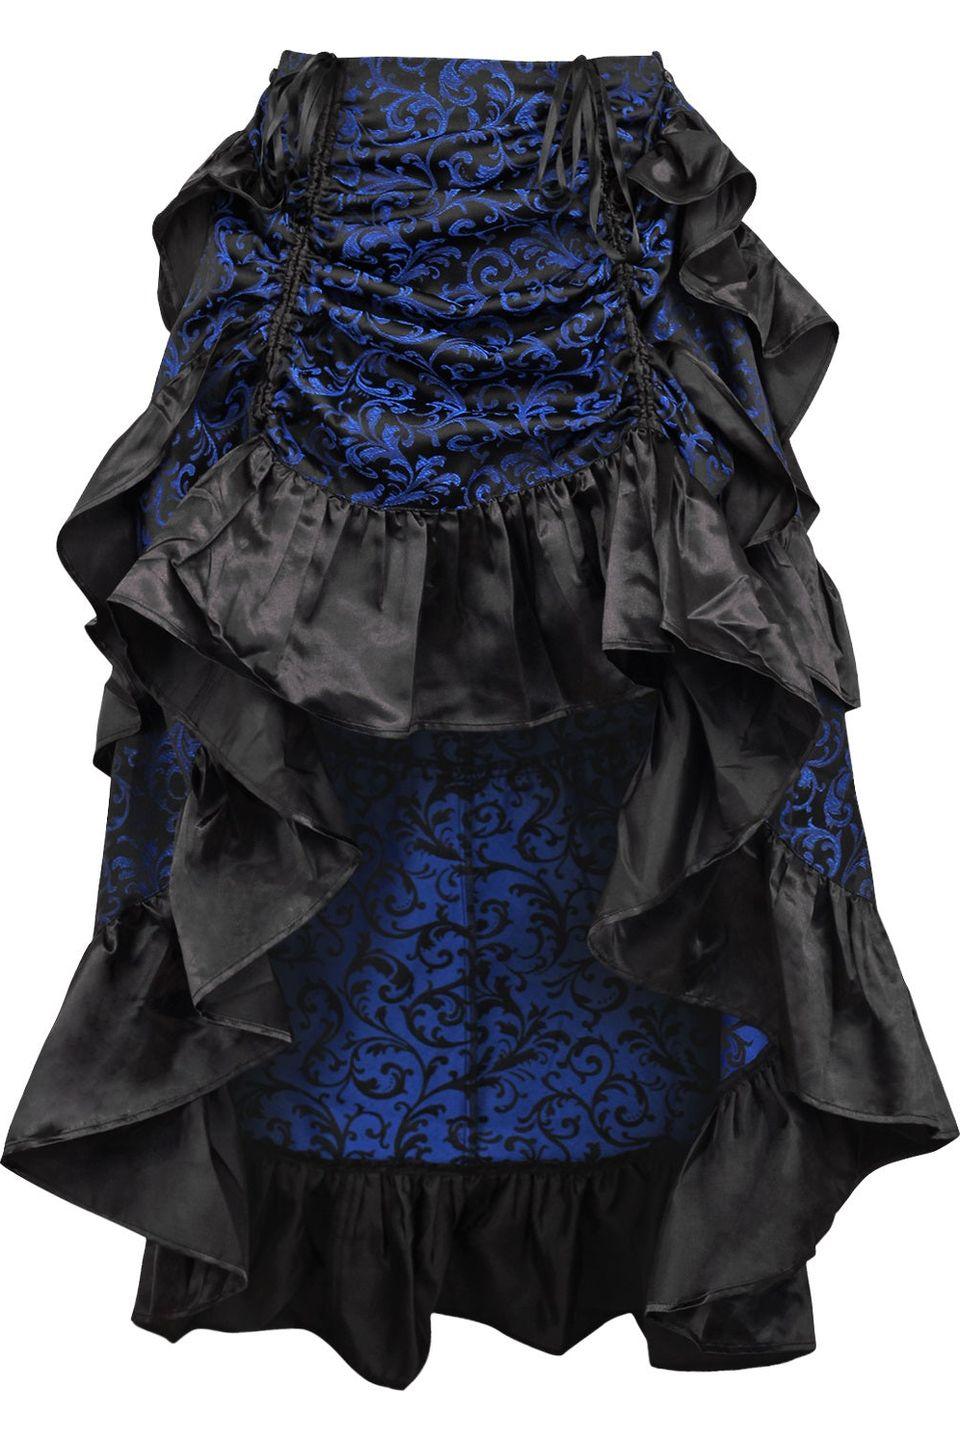 Blue/Black Brocade Adjustable High Low Bustle Skirt - AMIClubwear